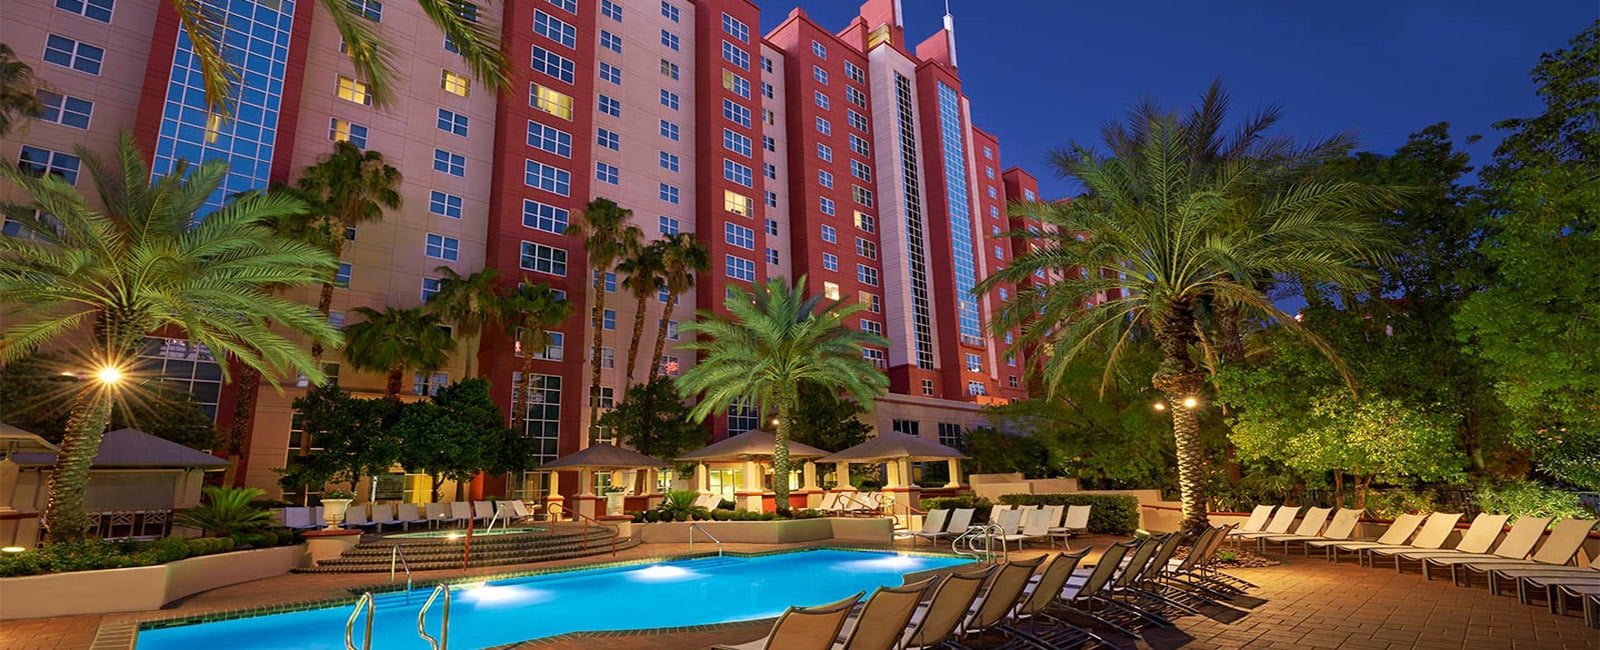 Pool Area of the Flamingo Resort in Las Vegas, Nevada